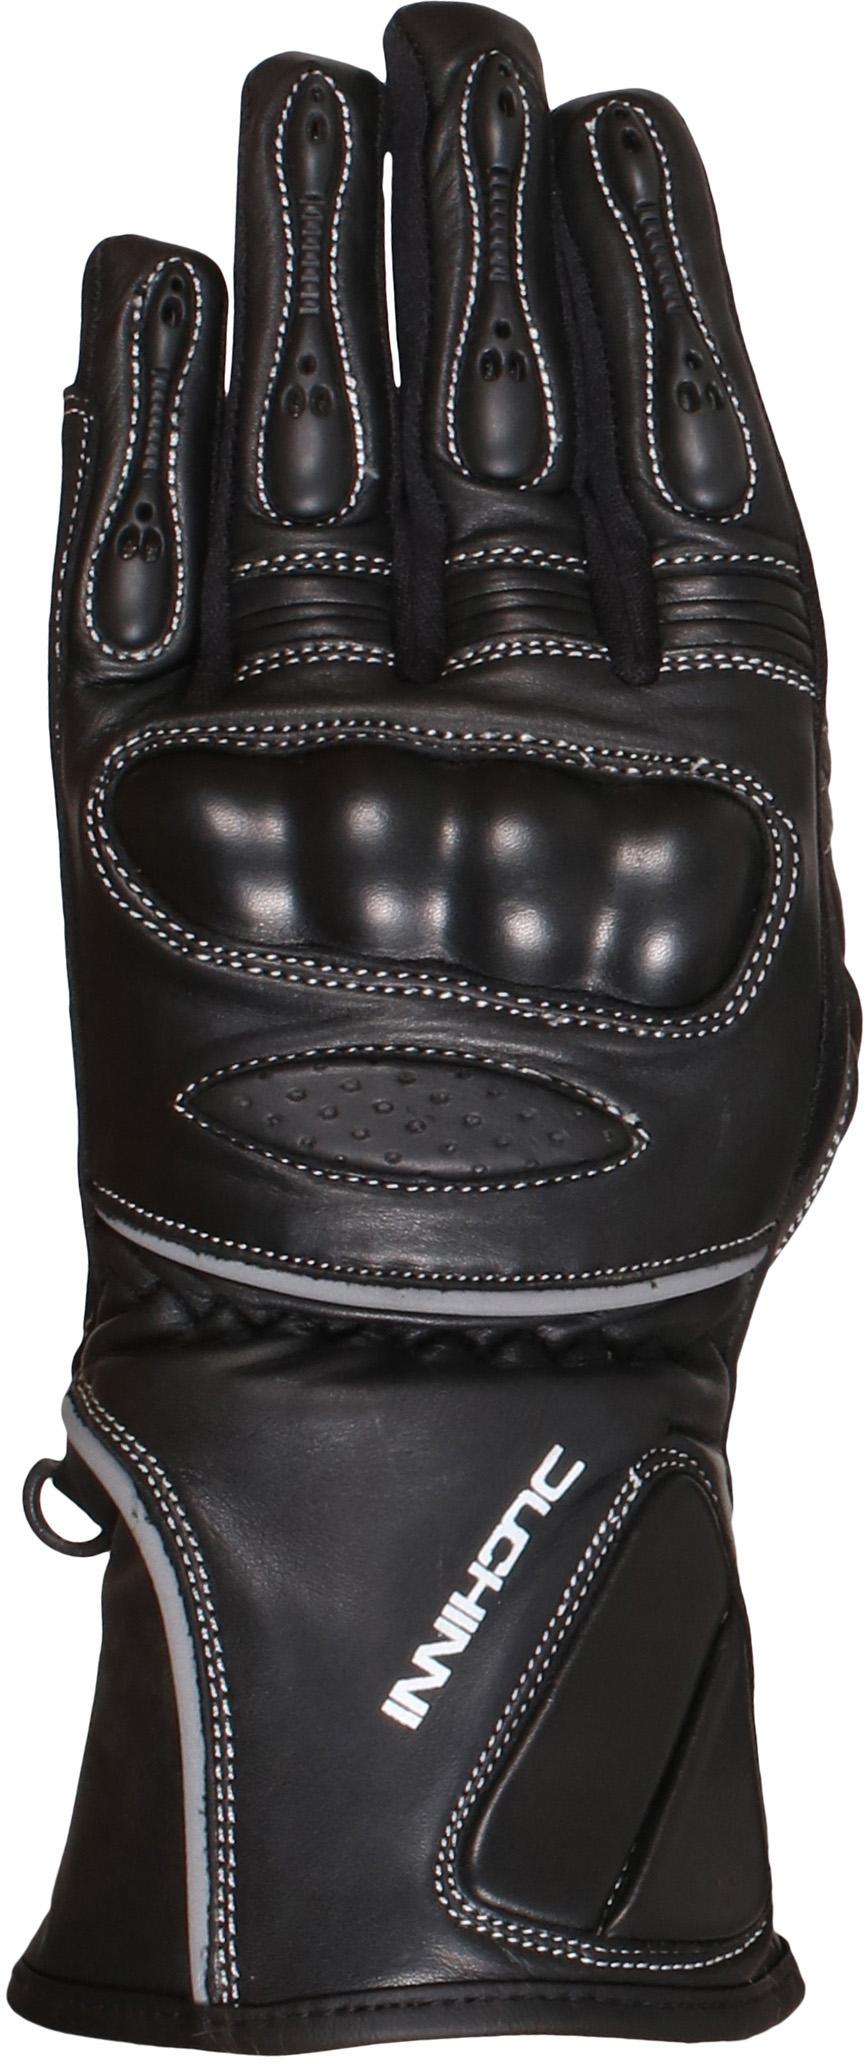 Duchinni Como Motorcycle Gloves - Black, Xs